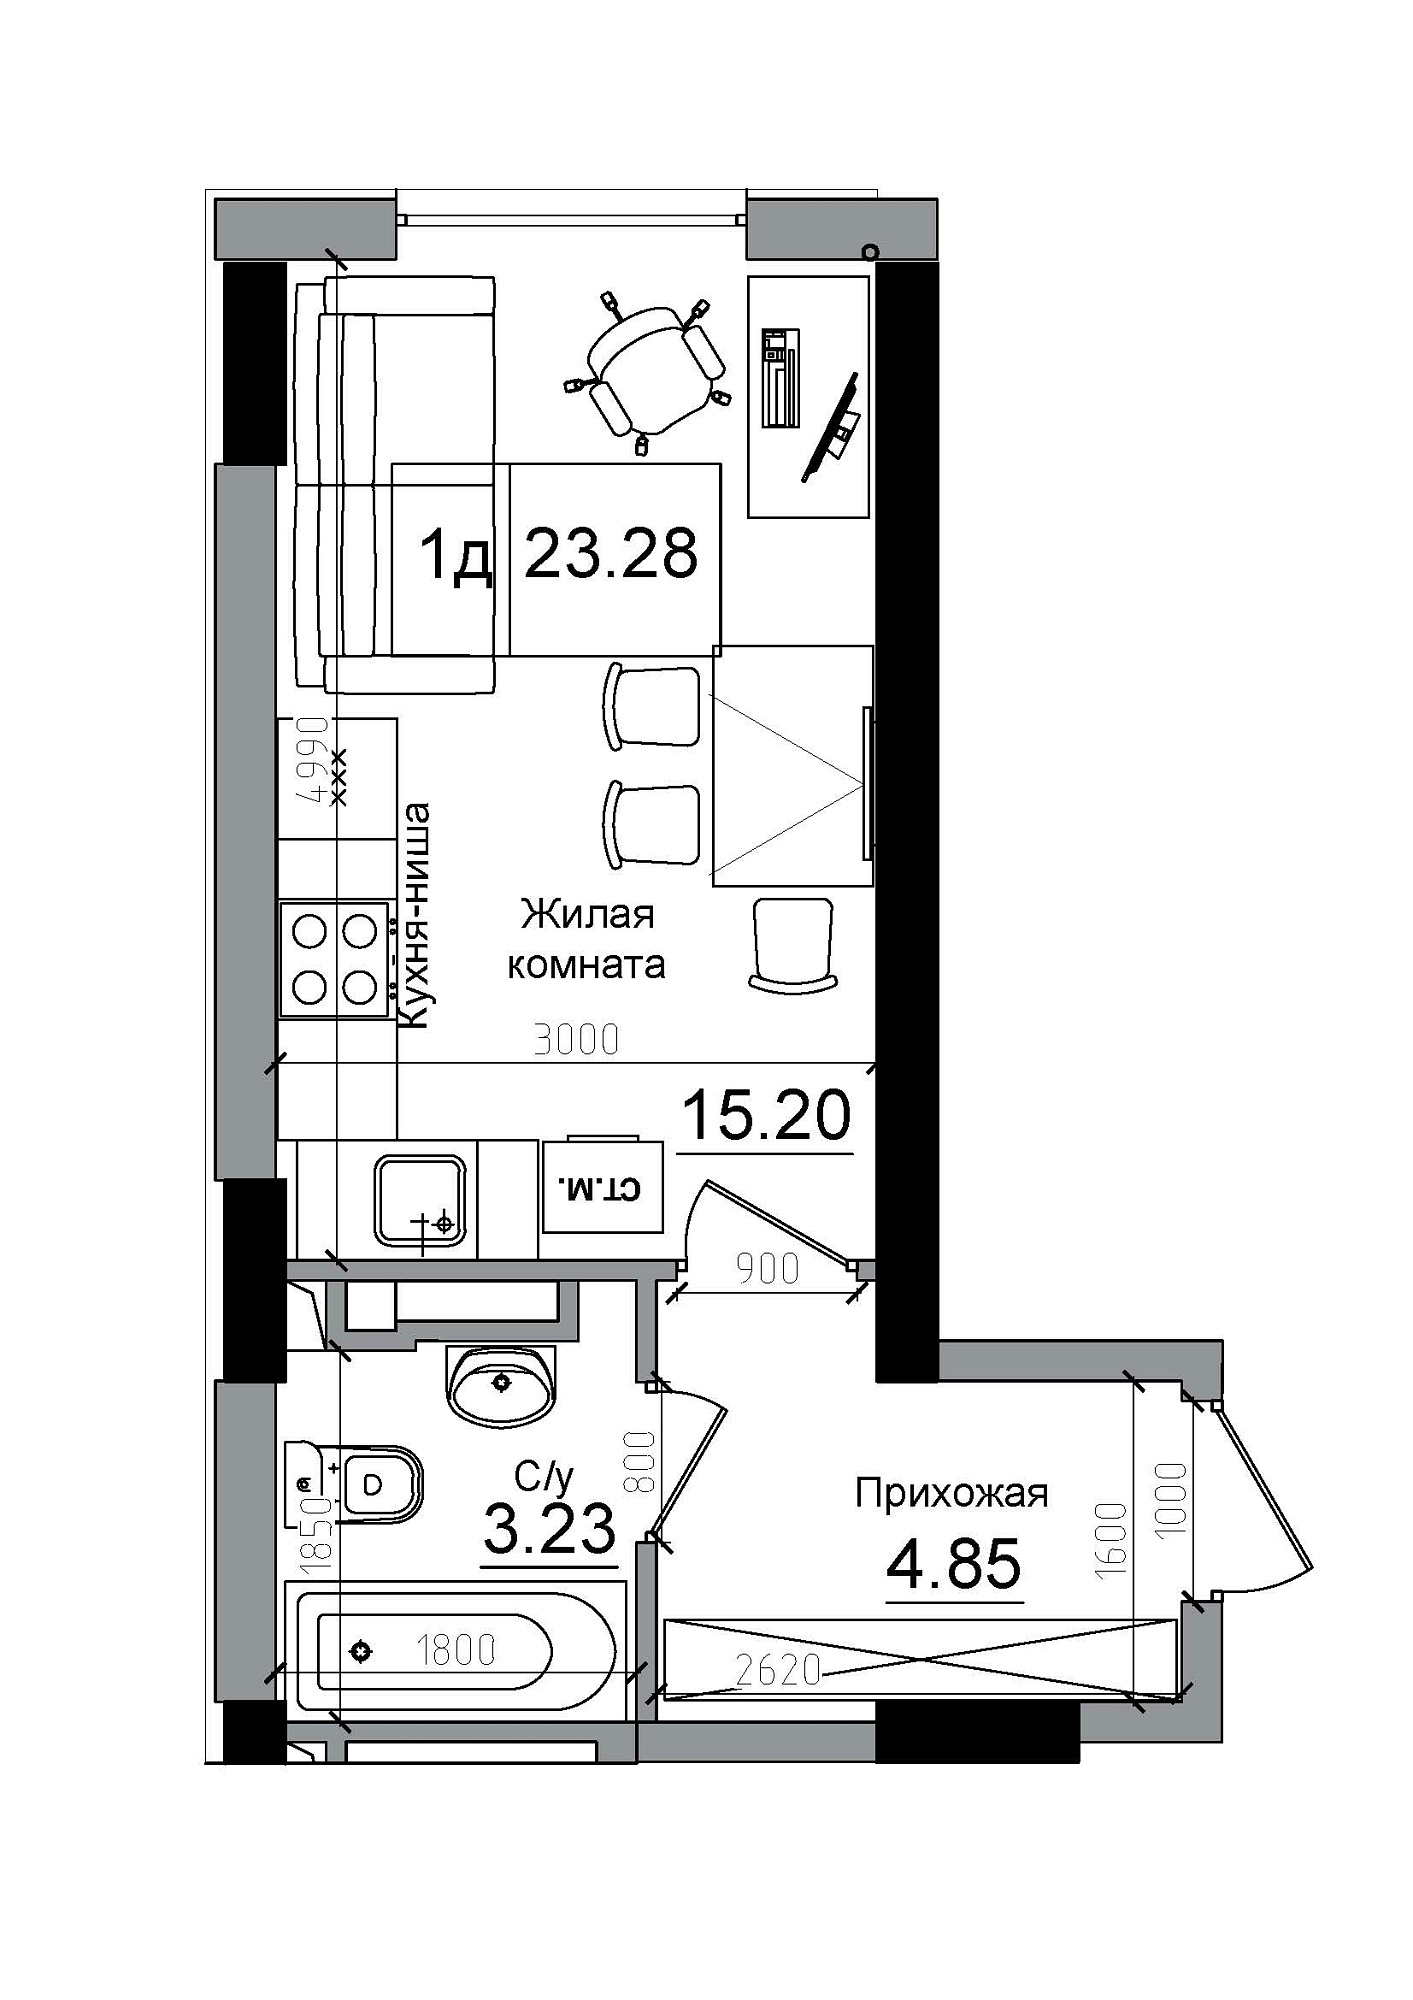 Planning Smart flats area 23.28m2, AB-12-02/00005.